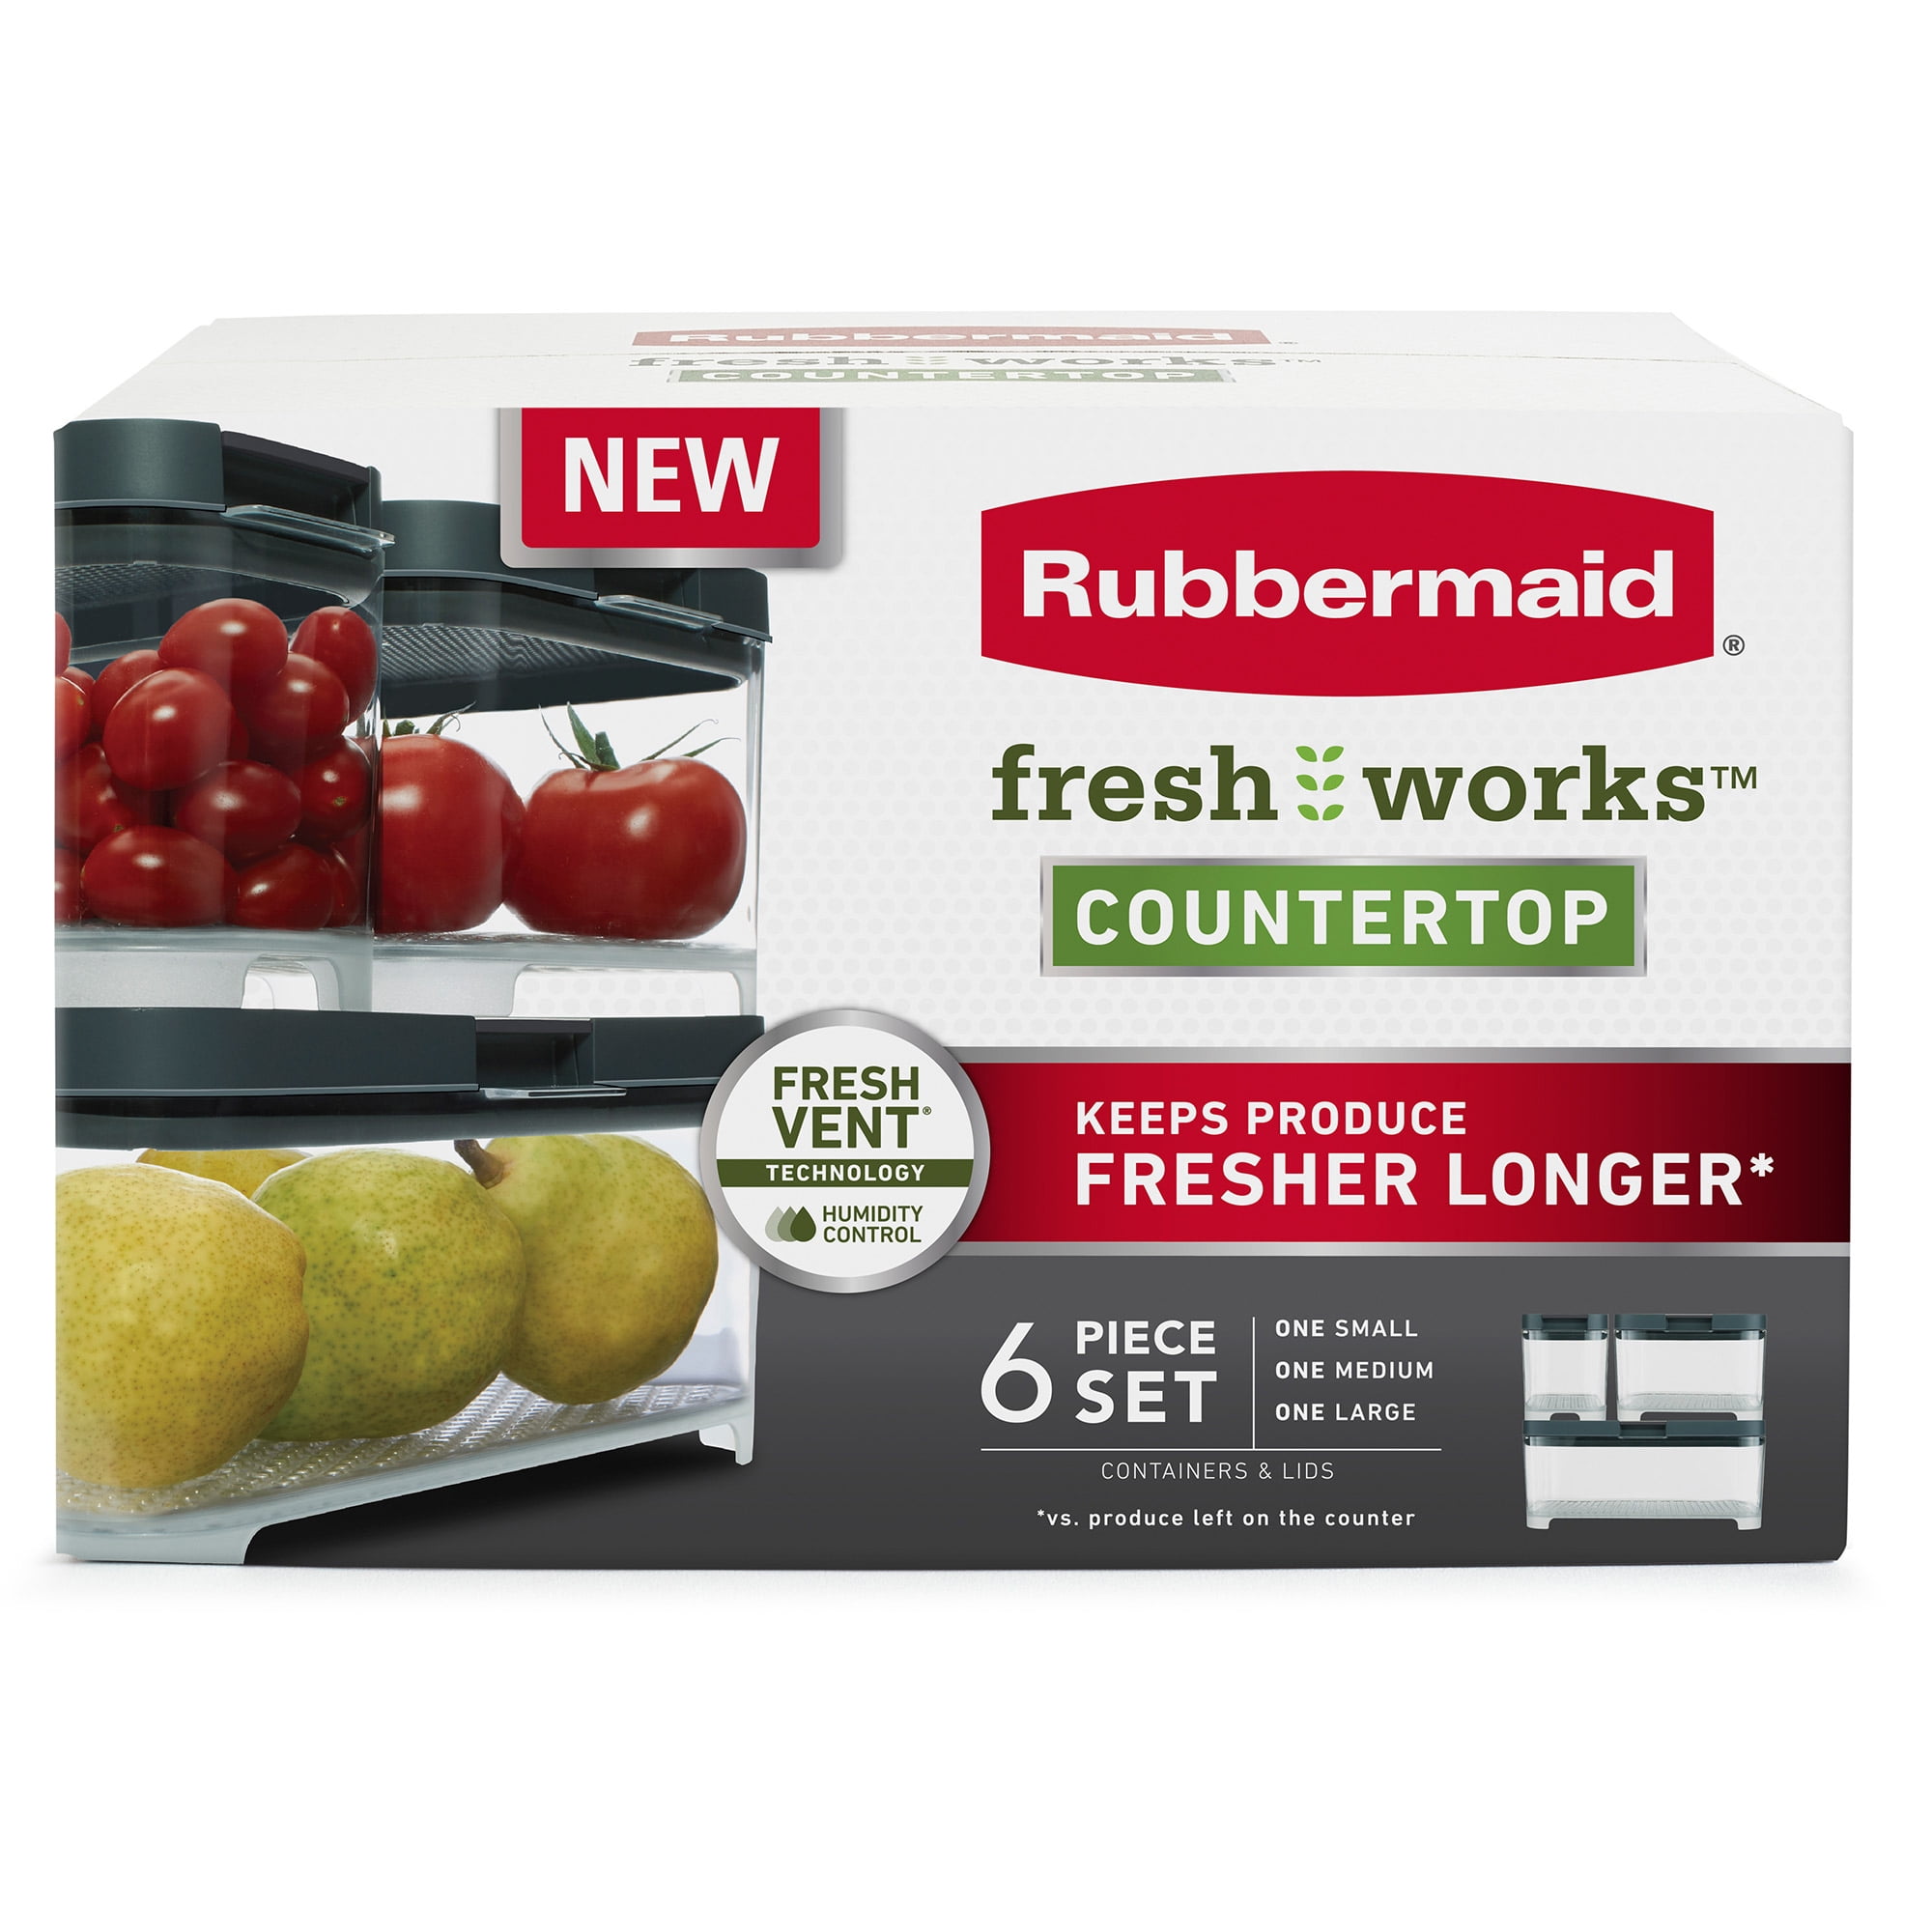 Rubbermaid® Fresh Works™ Medium Green/Clear Produce Saver